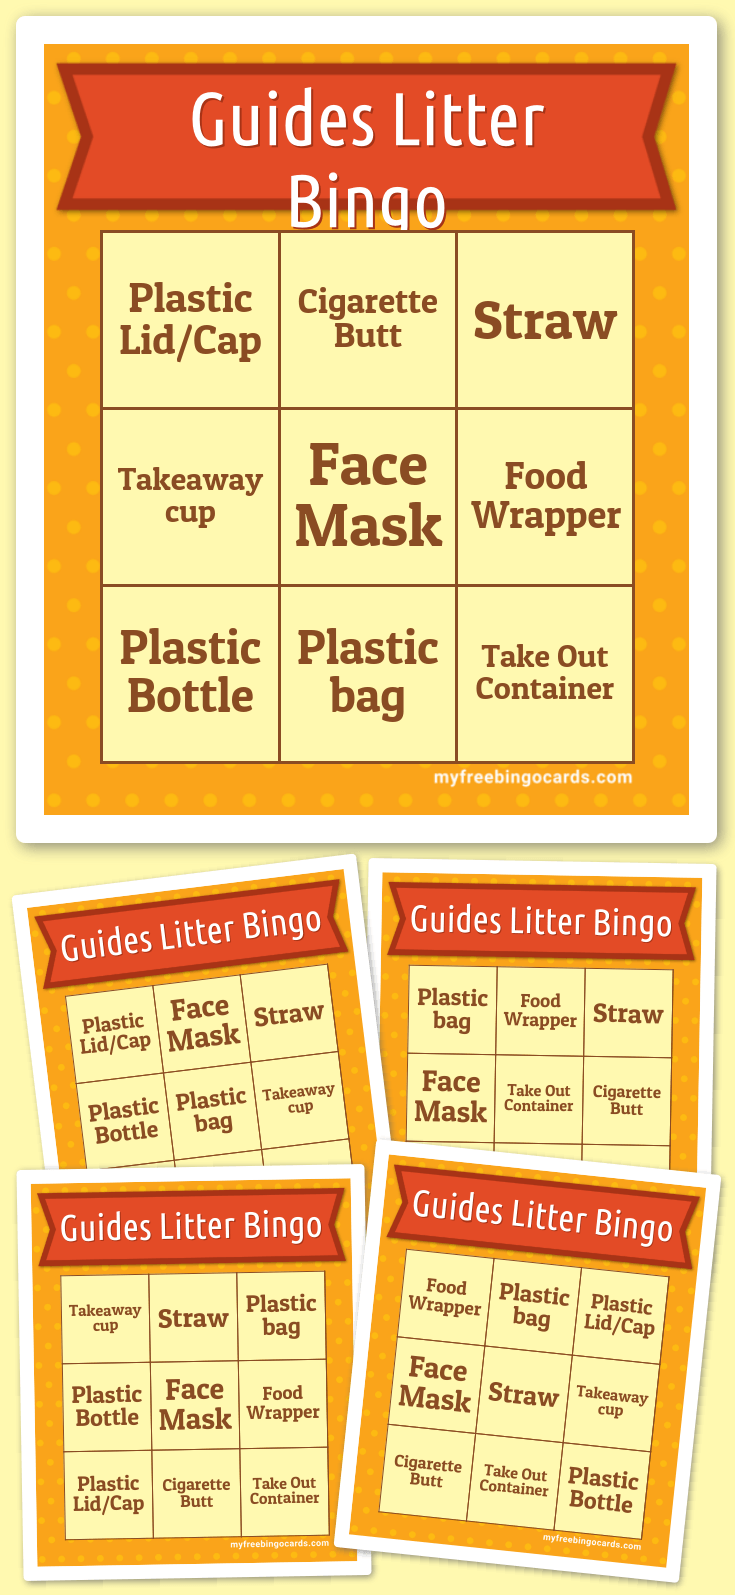 virtual-guides-litter-bingo